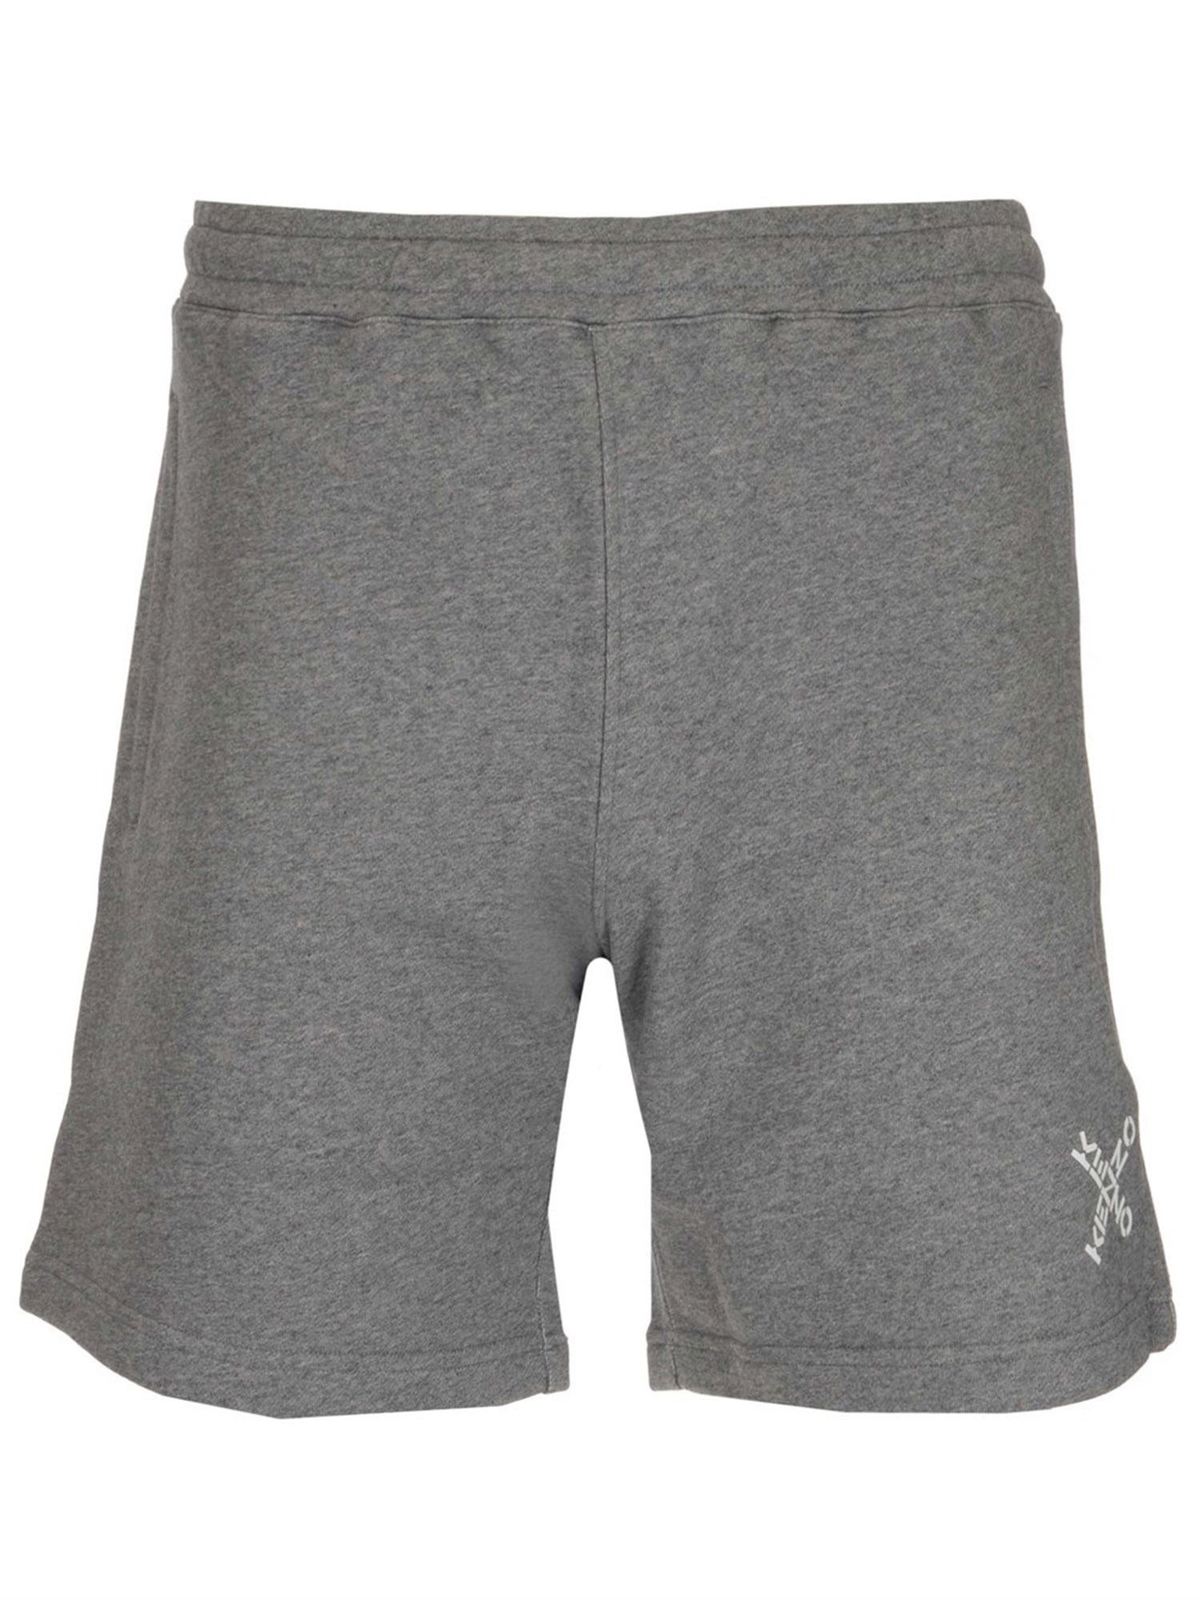 grey kenzo shorts